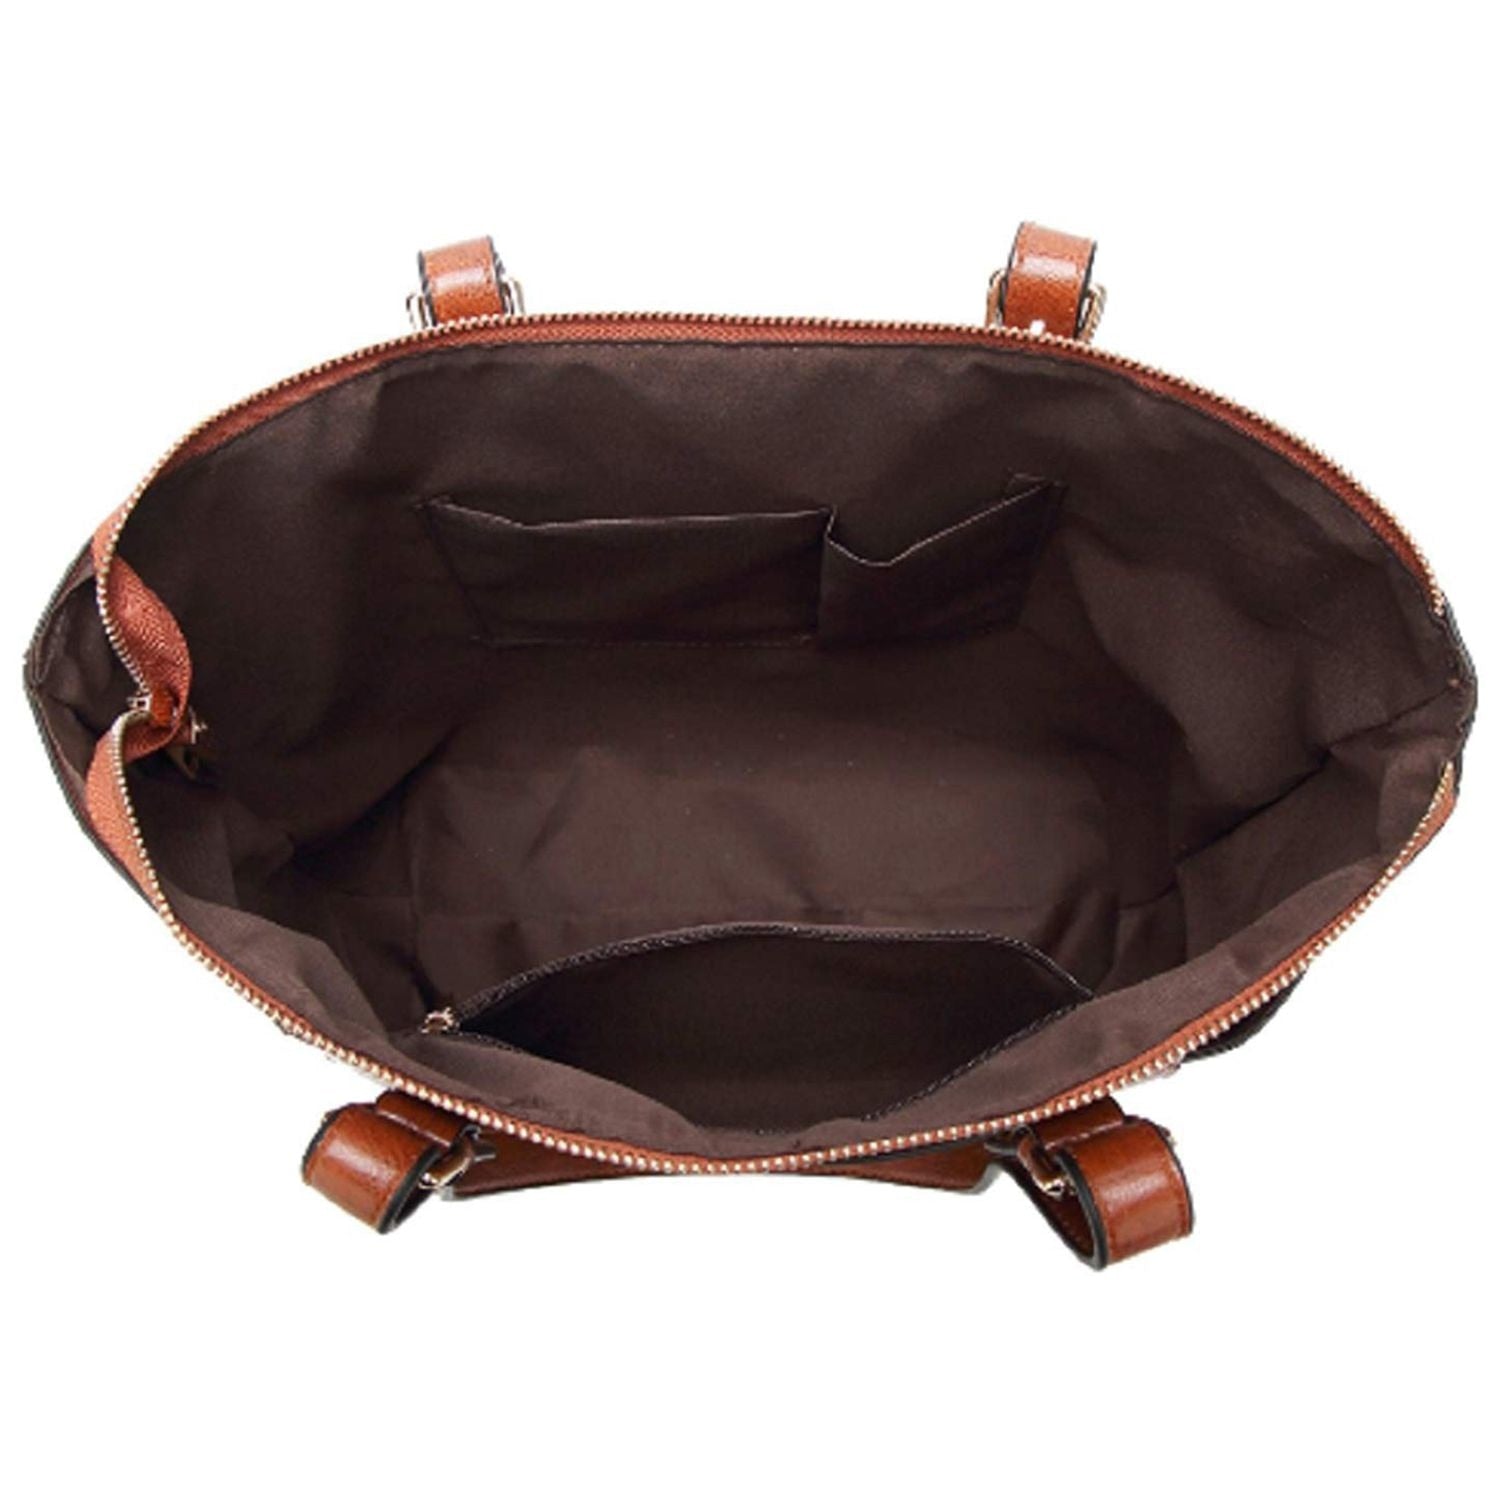 Business bag fashion bag leather bag for IPAD storage A4 size - ebowsos